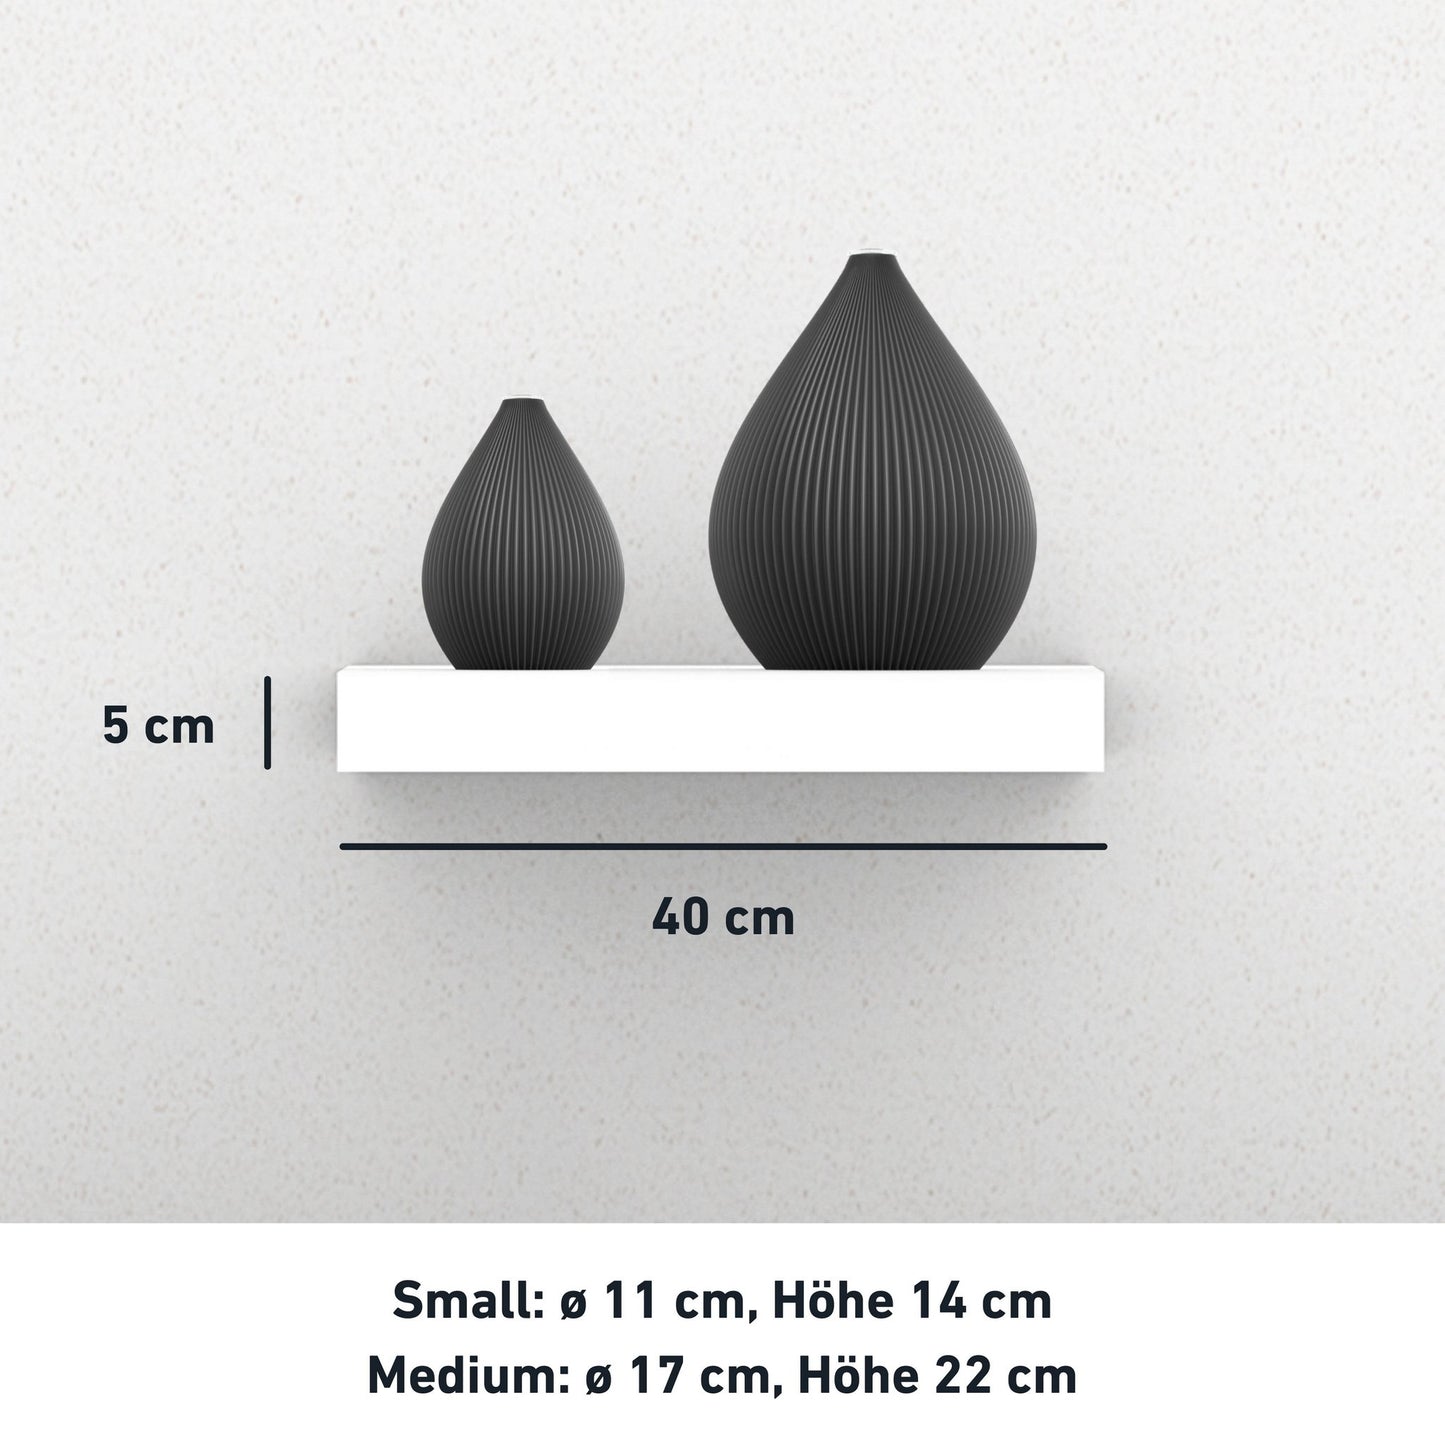 Balloon Vase |  Ideal für Trockenblumen | Inkl. Glaseinsatz | Biobasiertes Material | 100% recyclebar | Made in Germany | OUTLET